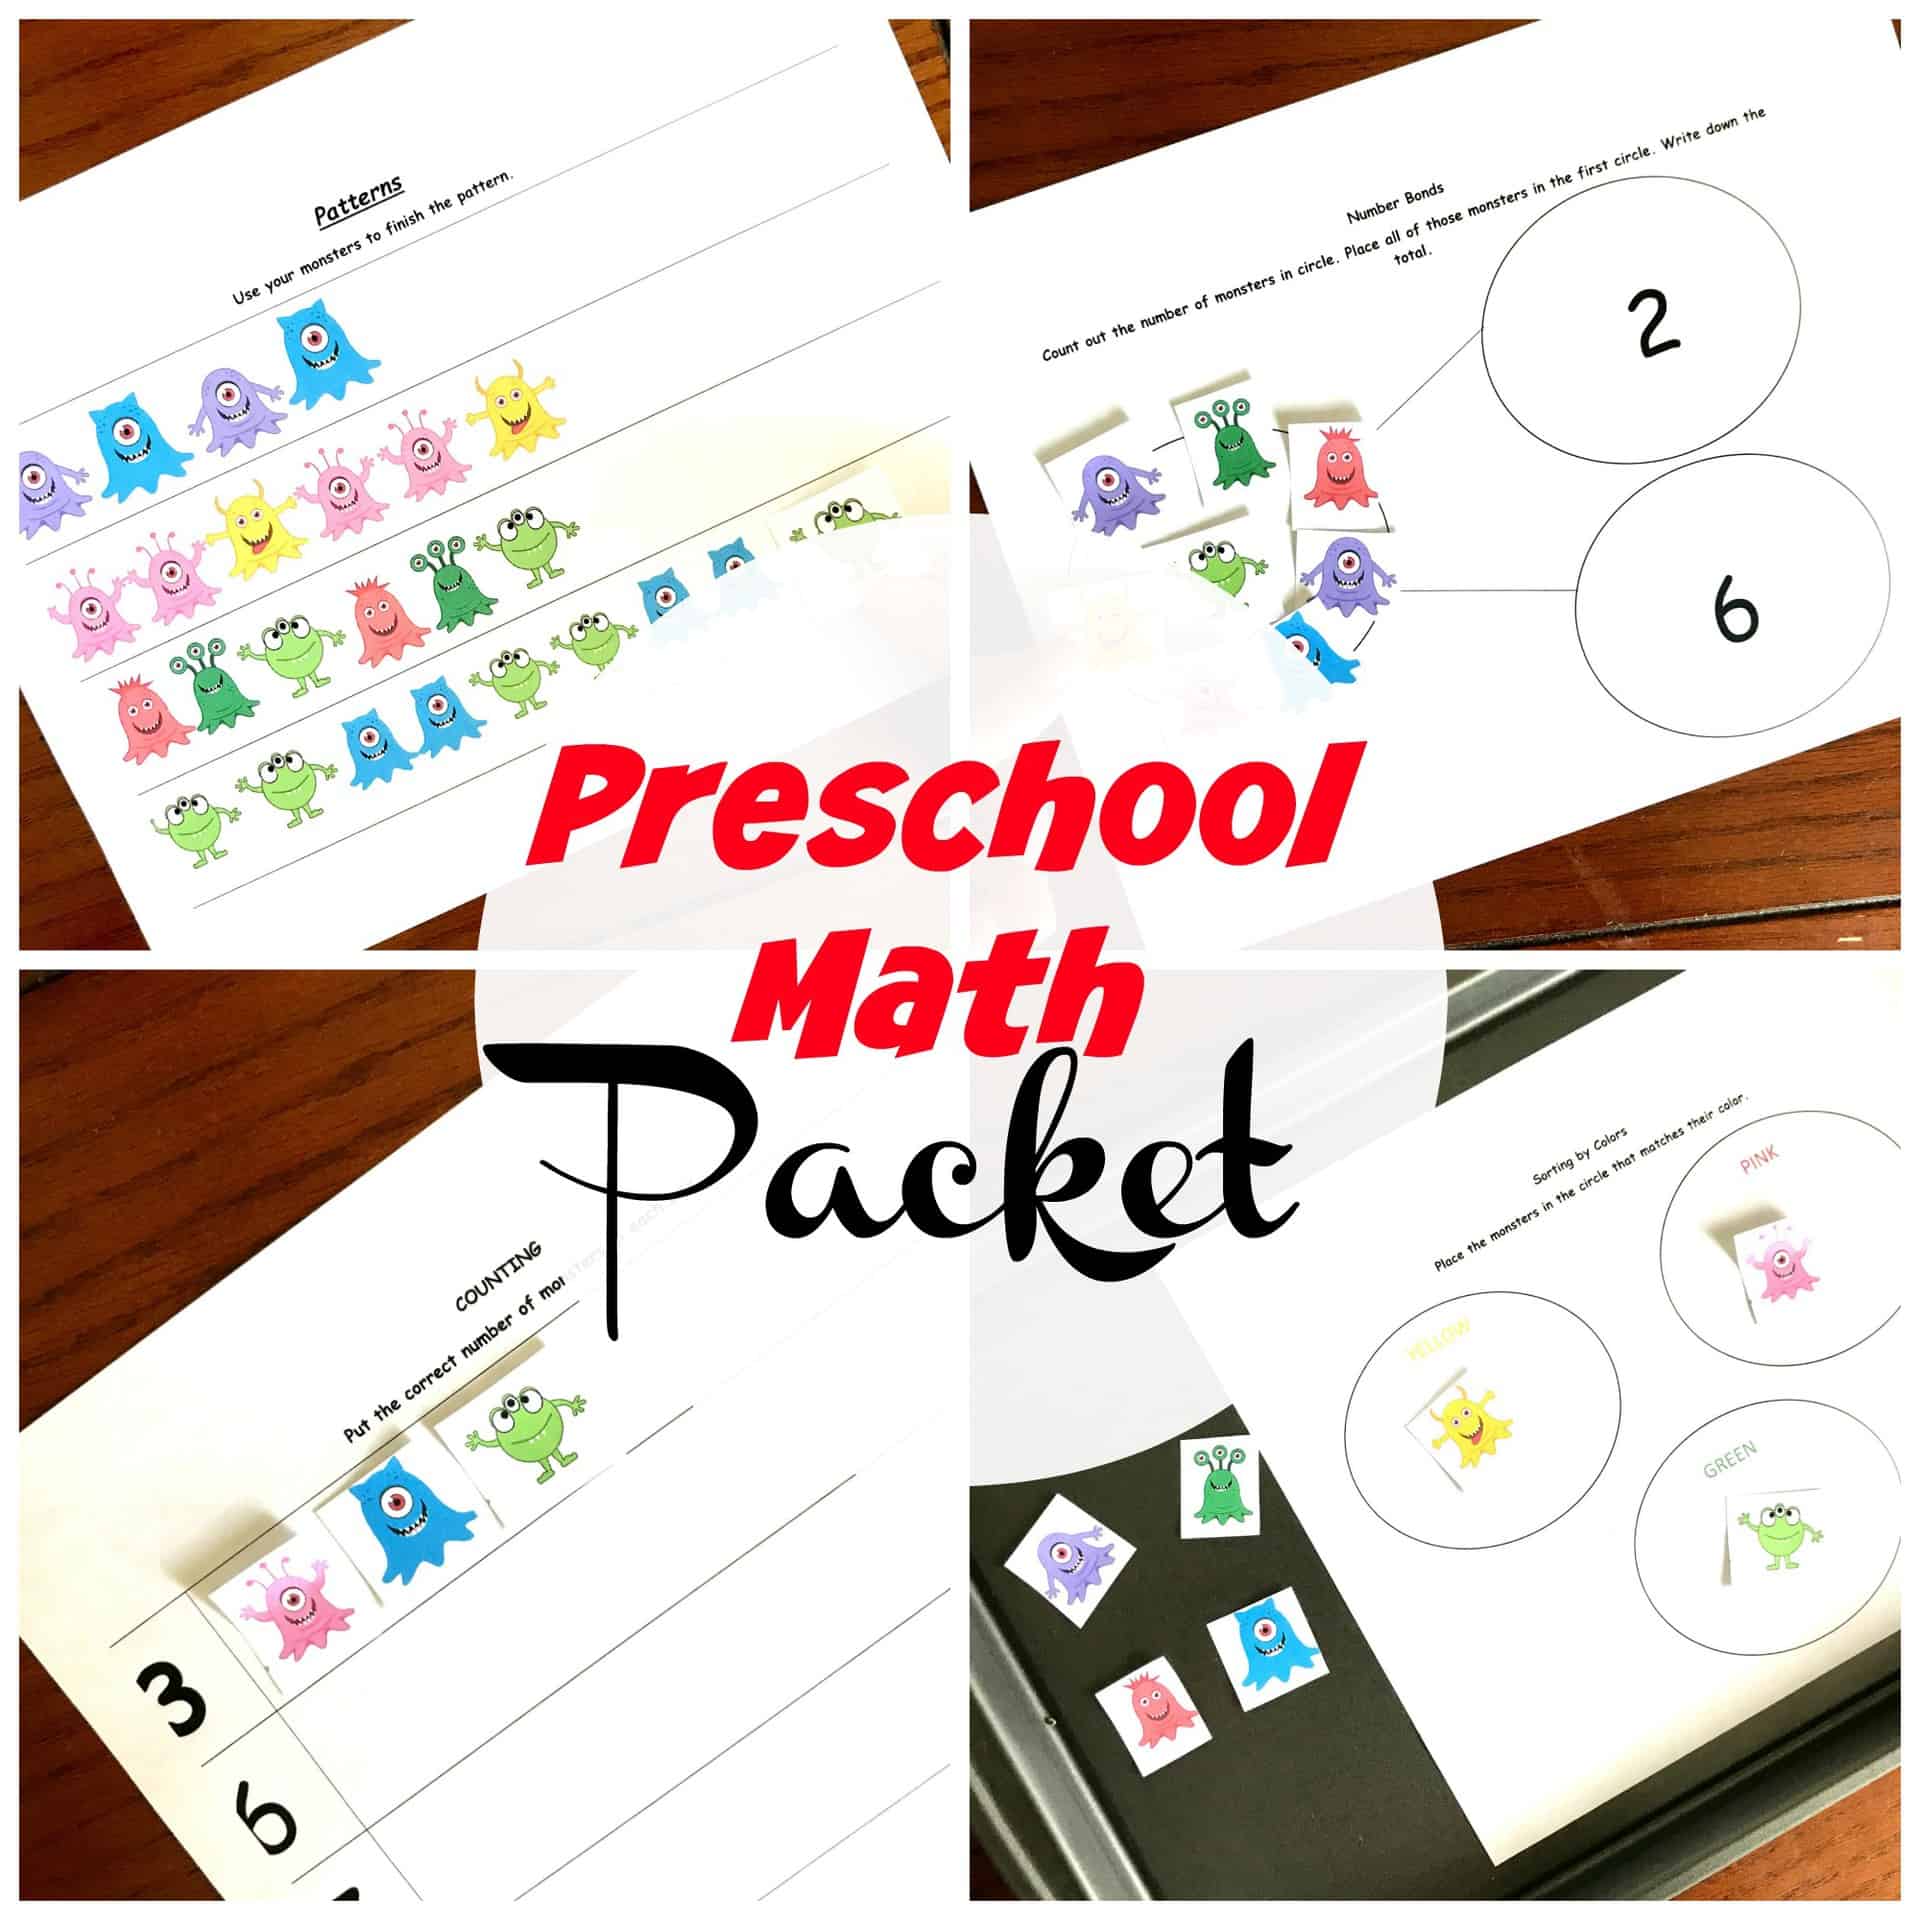 5 Preschool Math Worksheets | Practice Patterns, Sorting, Prepositions, and Number Bonds | Free Printable